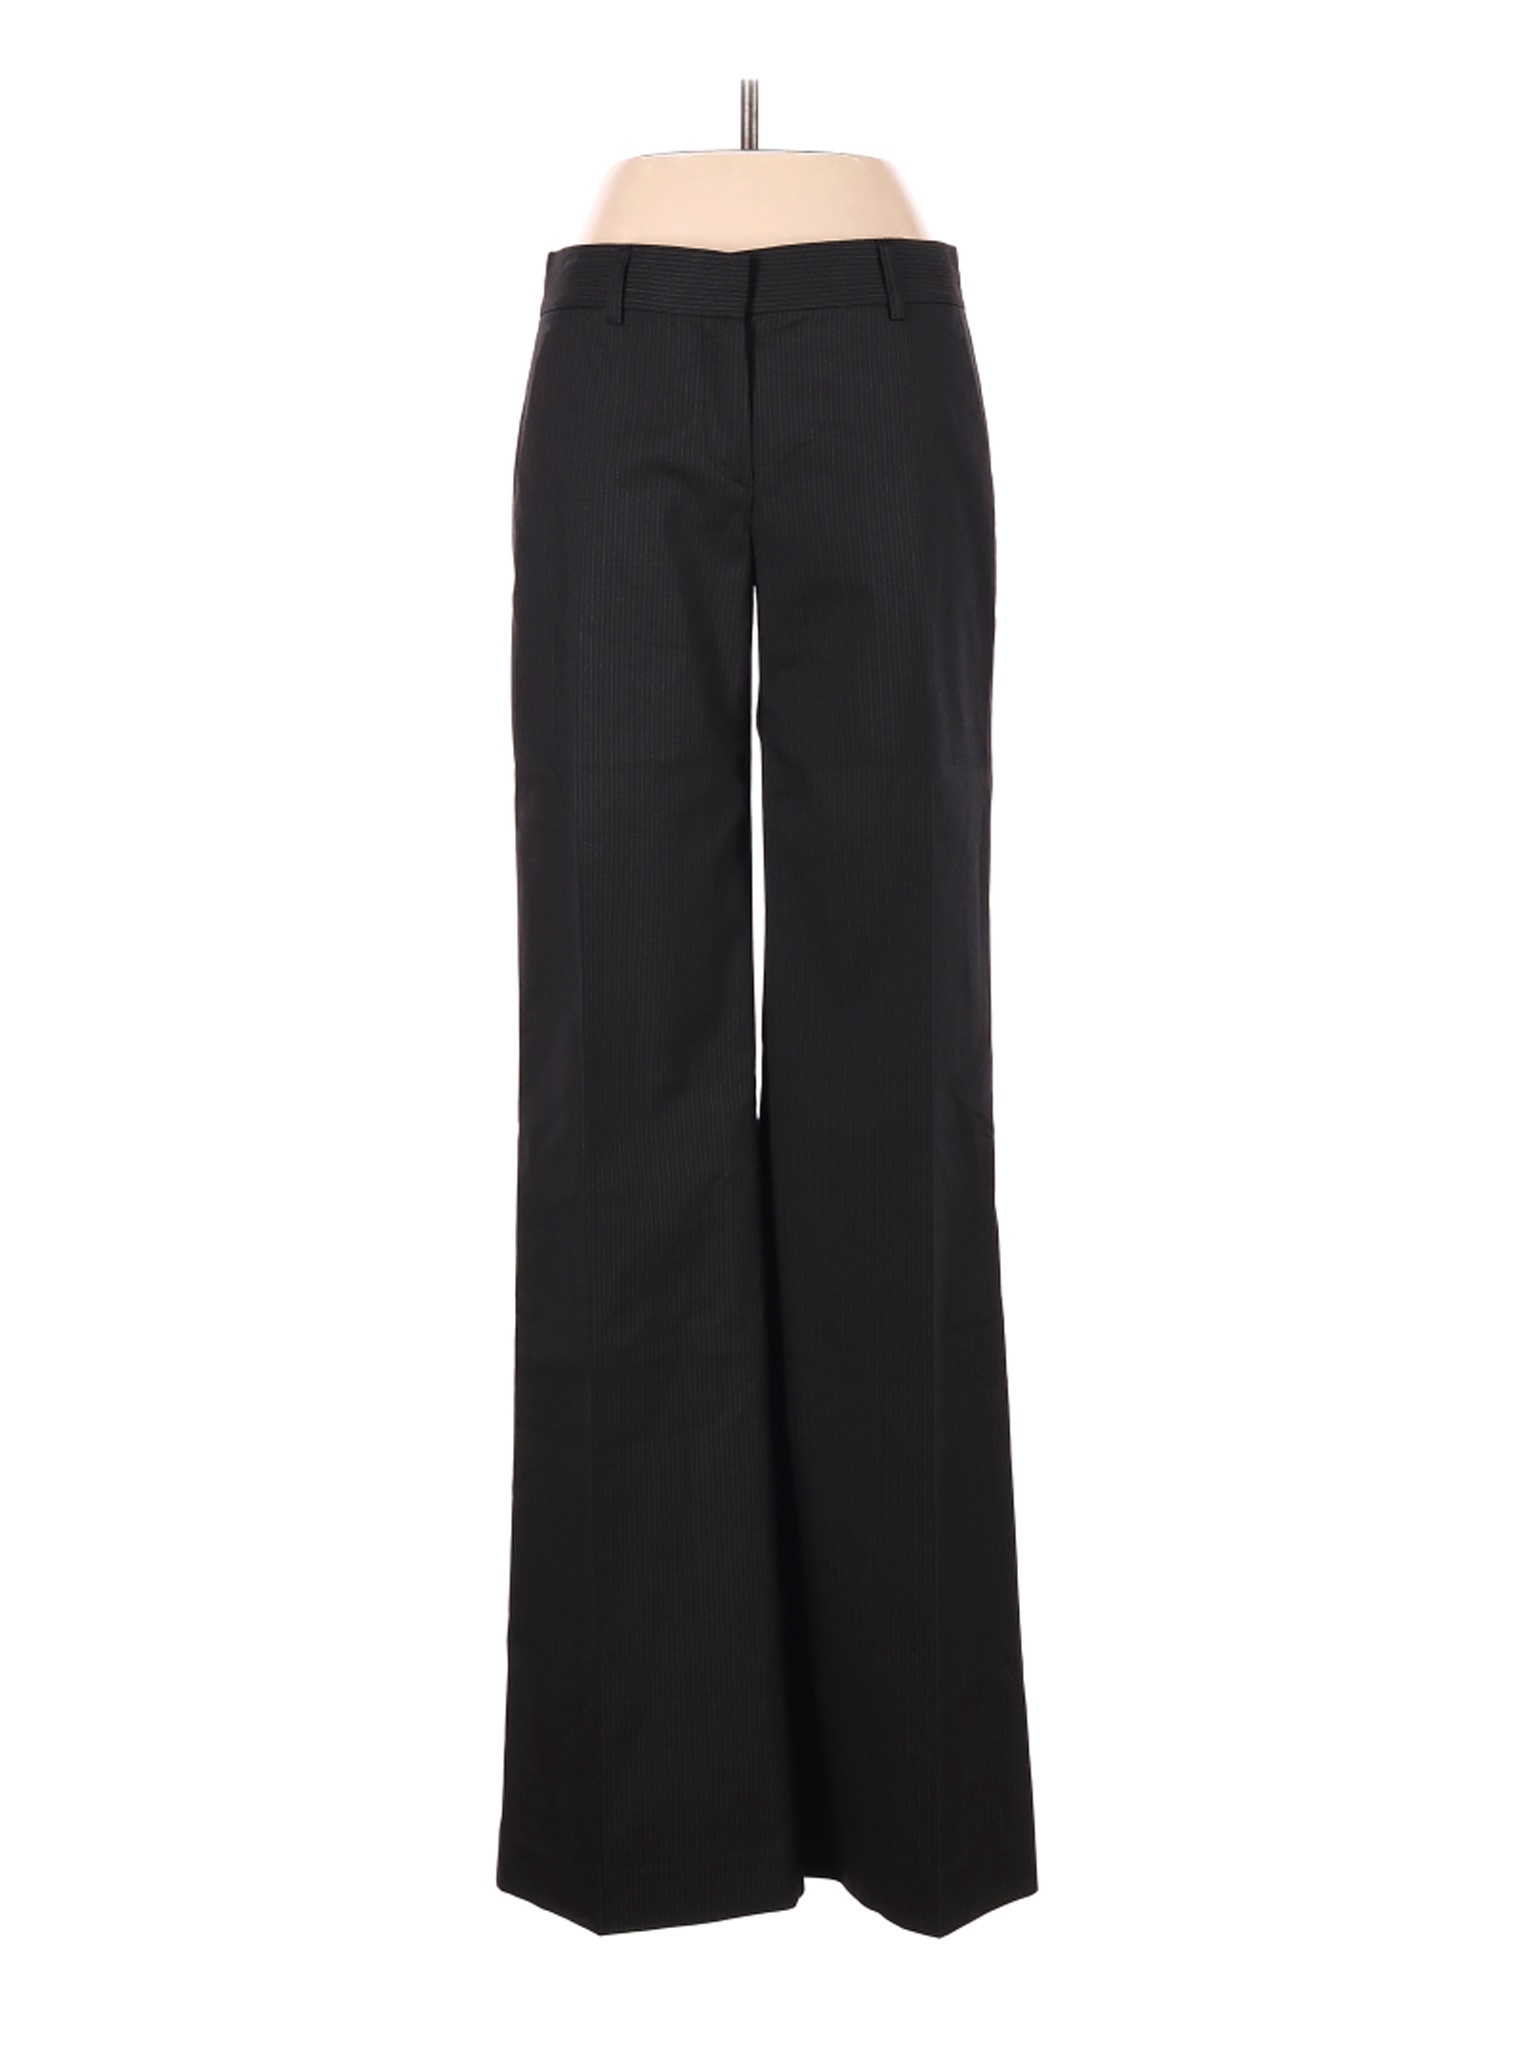 Theory Women Black Dress Pants 4 | eBay